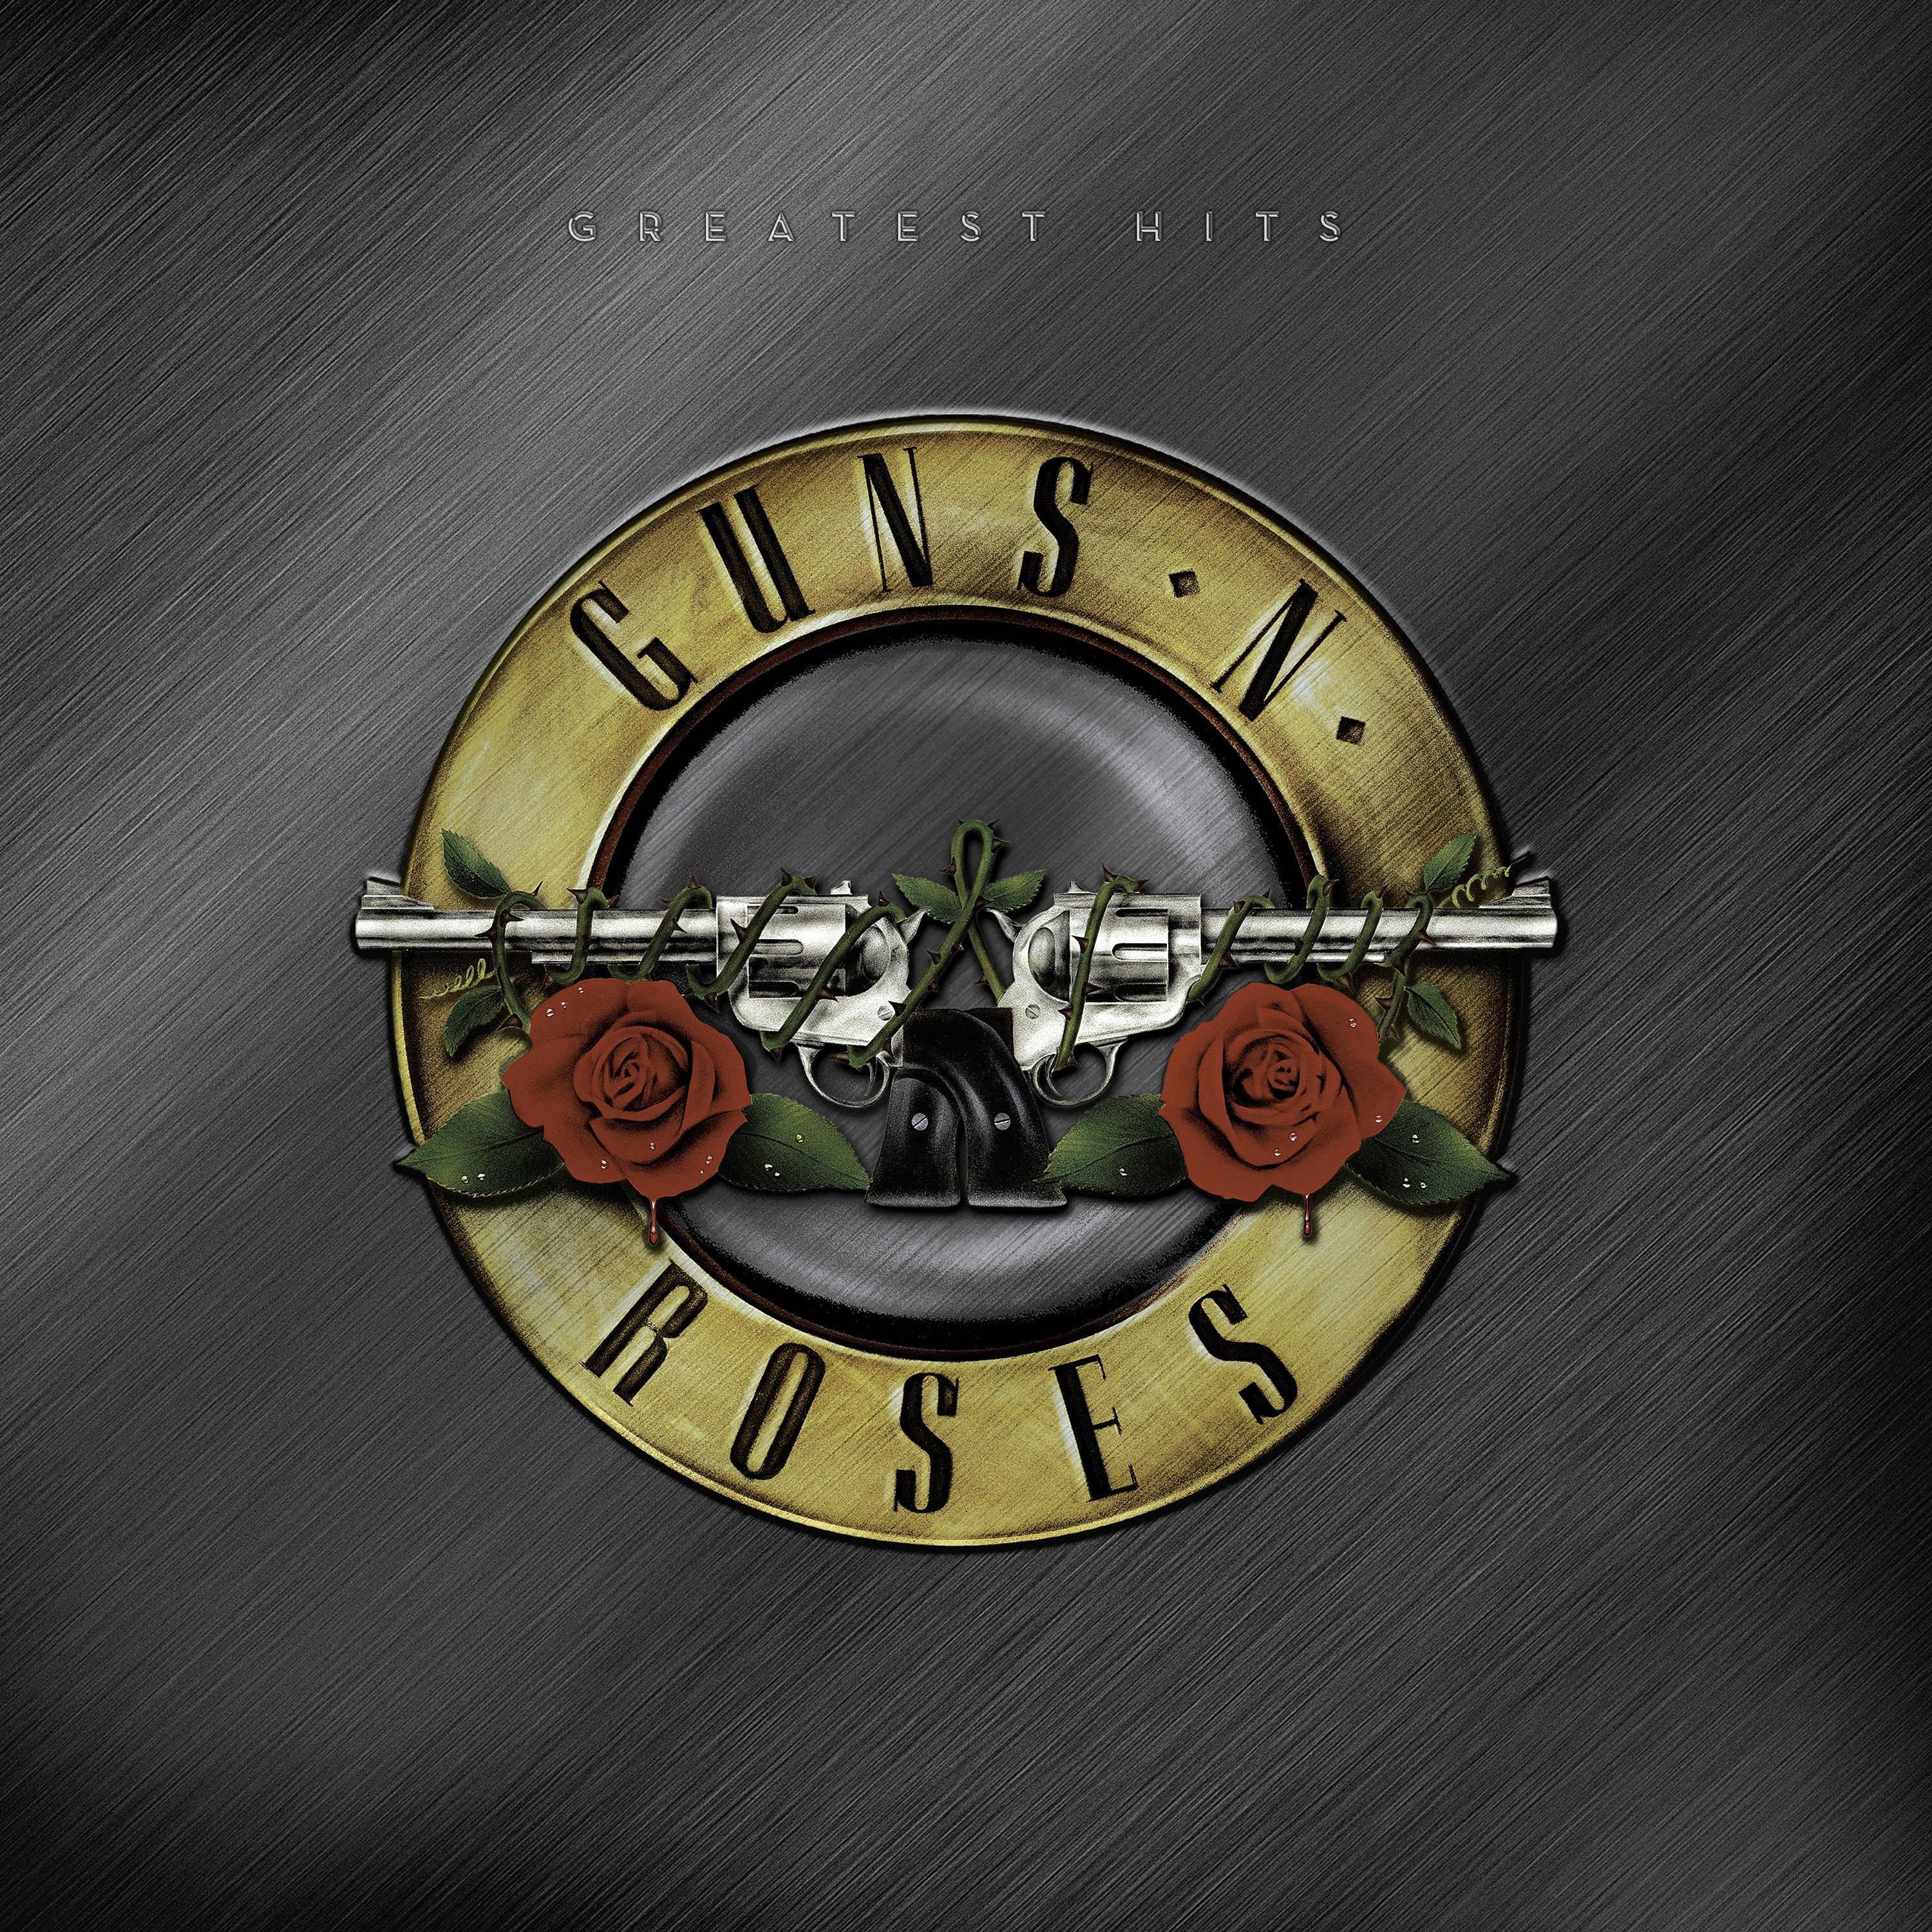 Guns & Roses - Greatest Hits - CD Album - SILBERSHELL